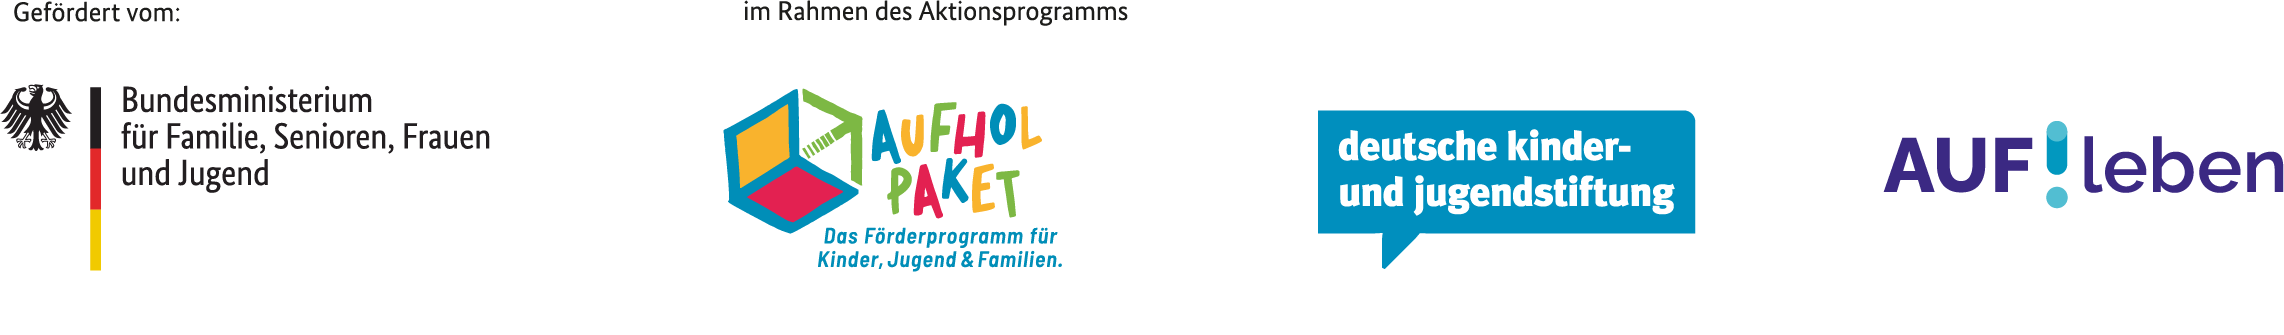 Fördern die Standorte Plaßschule & Bückhardtschule